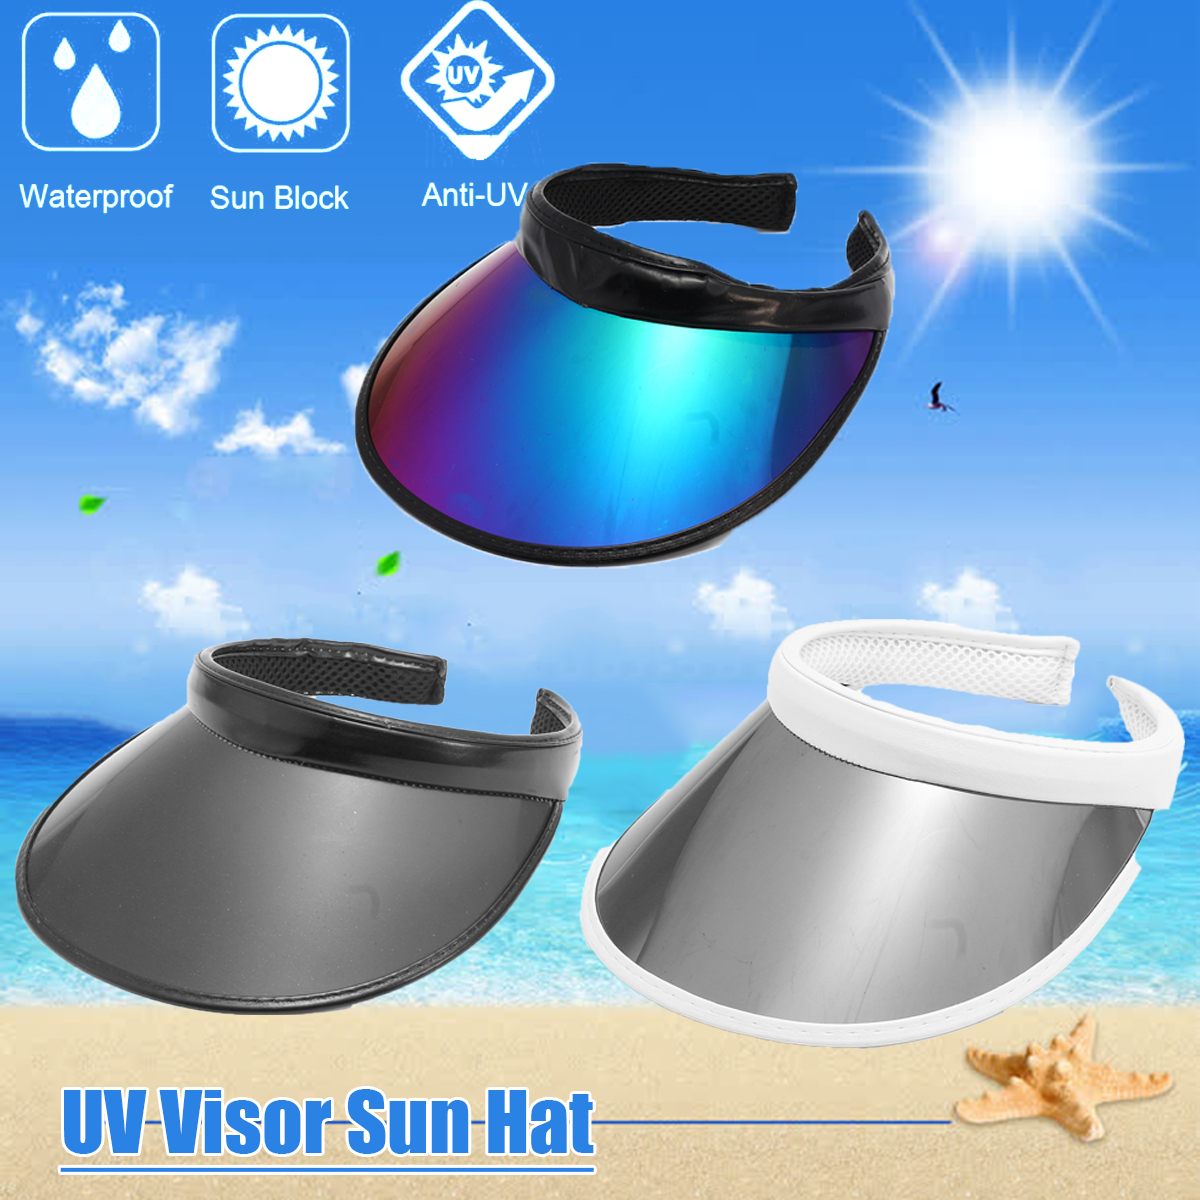 Outdoor-Camping-Hat-Summer-UV-Plastic-Visor-Sun-Hat-Clear-Tennis-Beach-Hat-Protection-Snapback-Cap-1338577-1